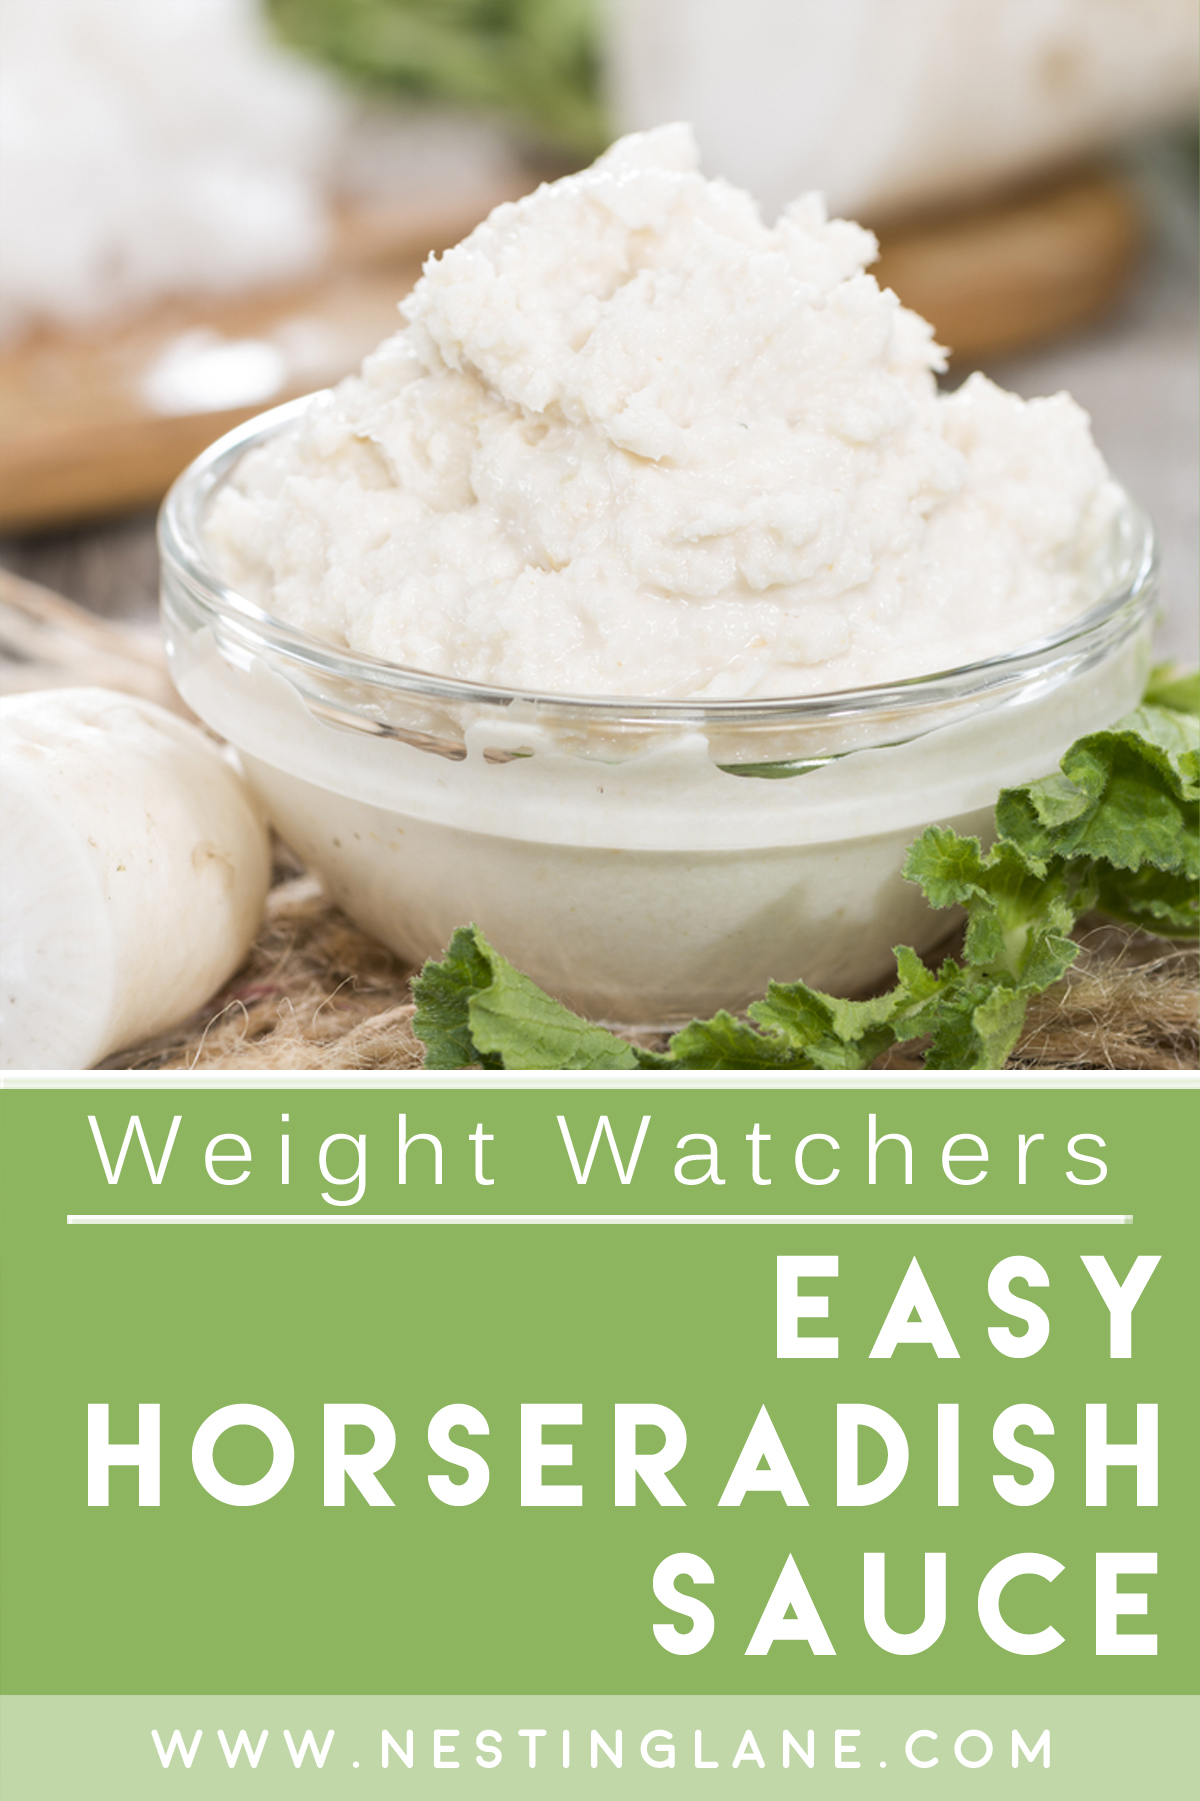 Graphic for Pinterest of Weight Watchers Easy Horseradish Sauce Recipe.